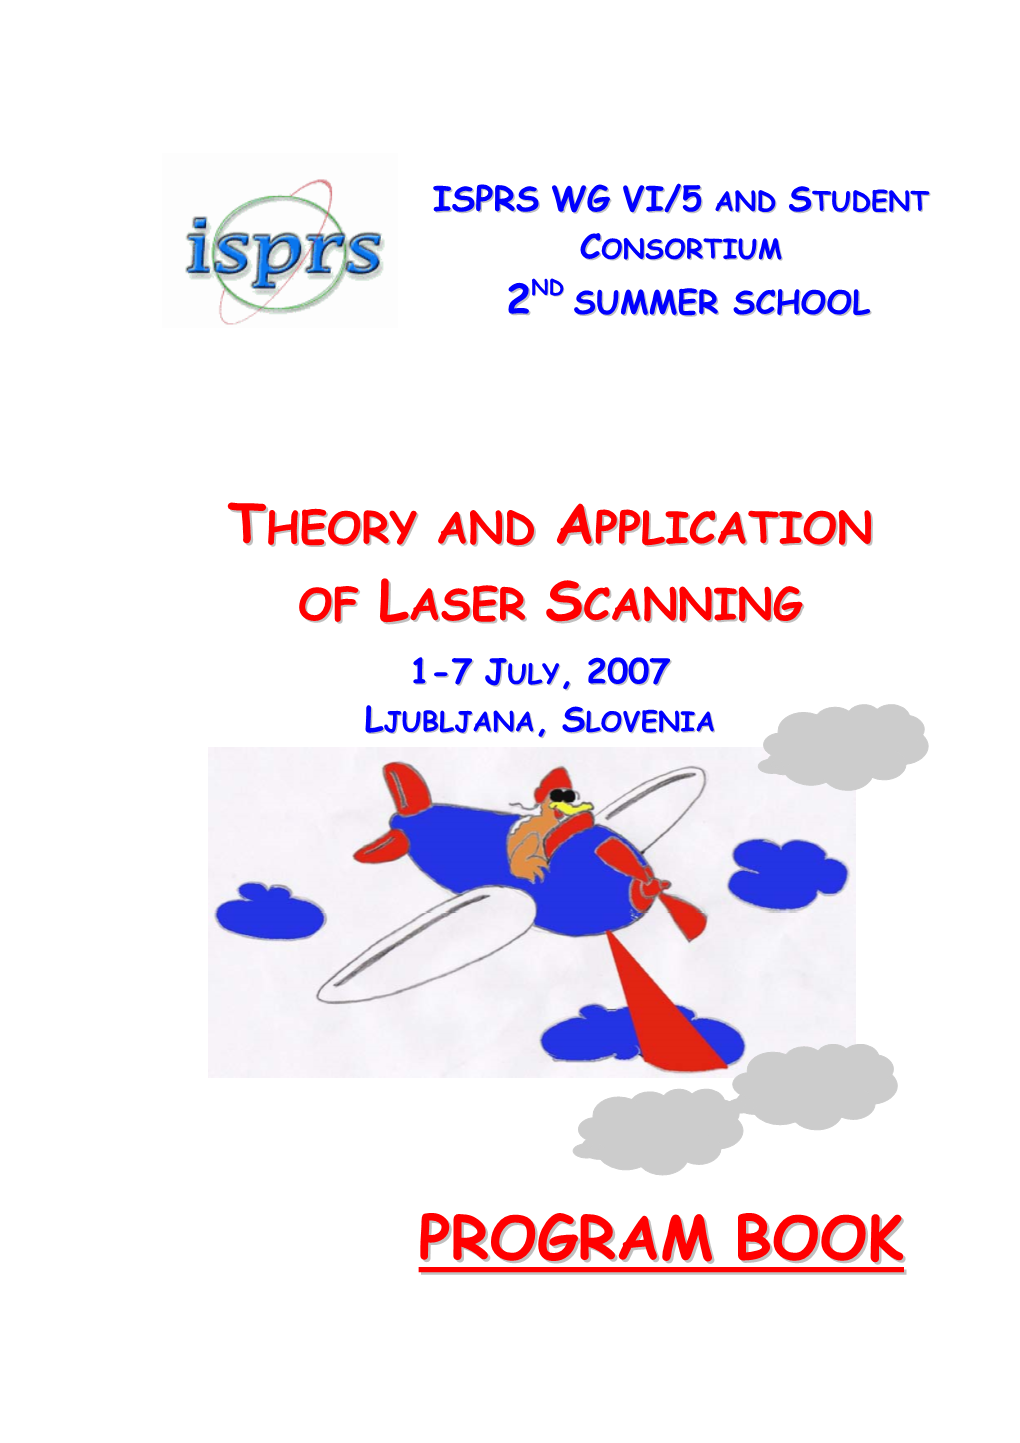 PROGRAM BOOK ISPRS VI/5 & SC Summer School Theory and Application of Laser Scanning July 1-7, 2007, Ljubljana, SLOVENIA